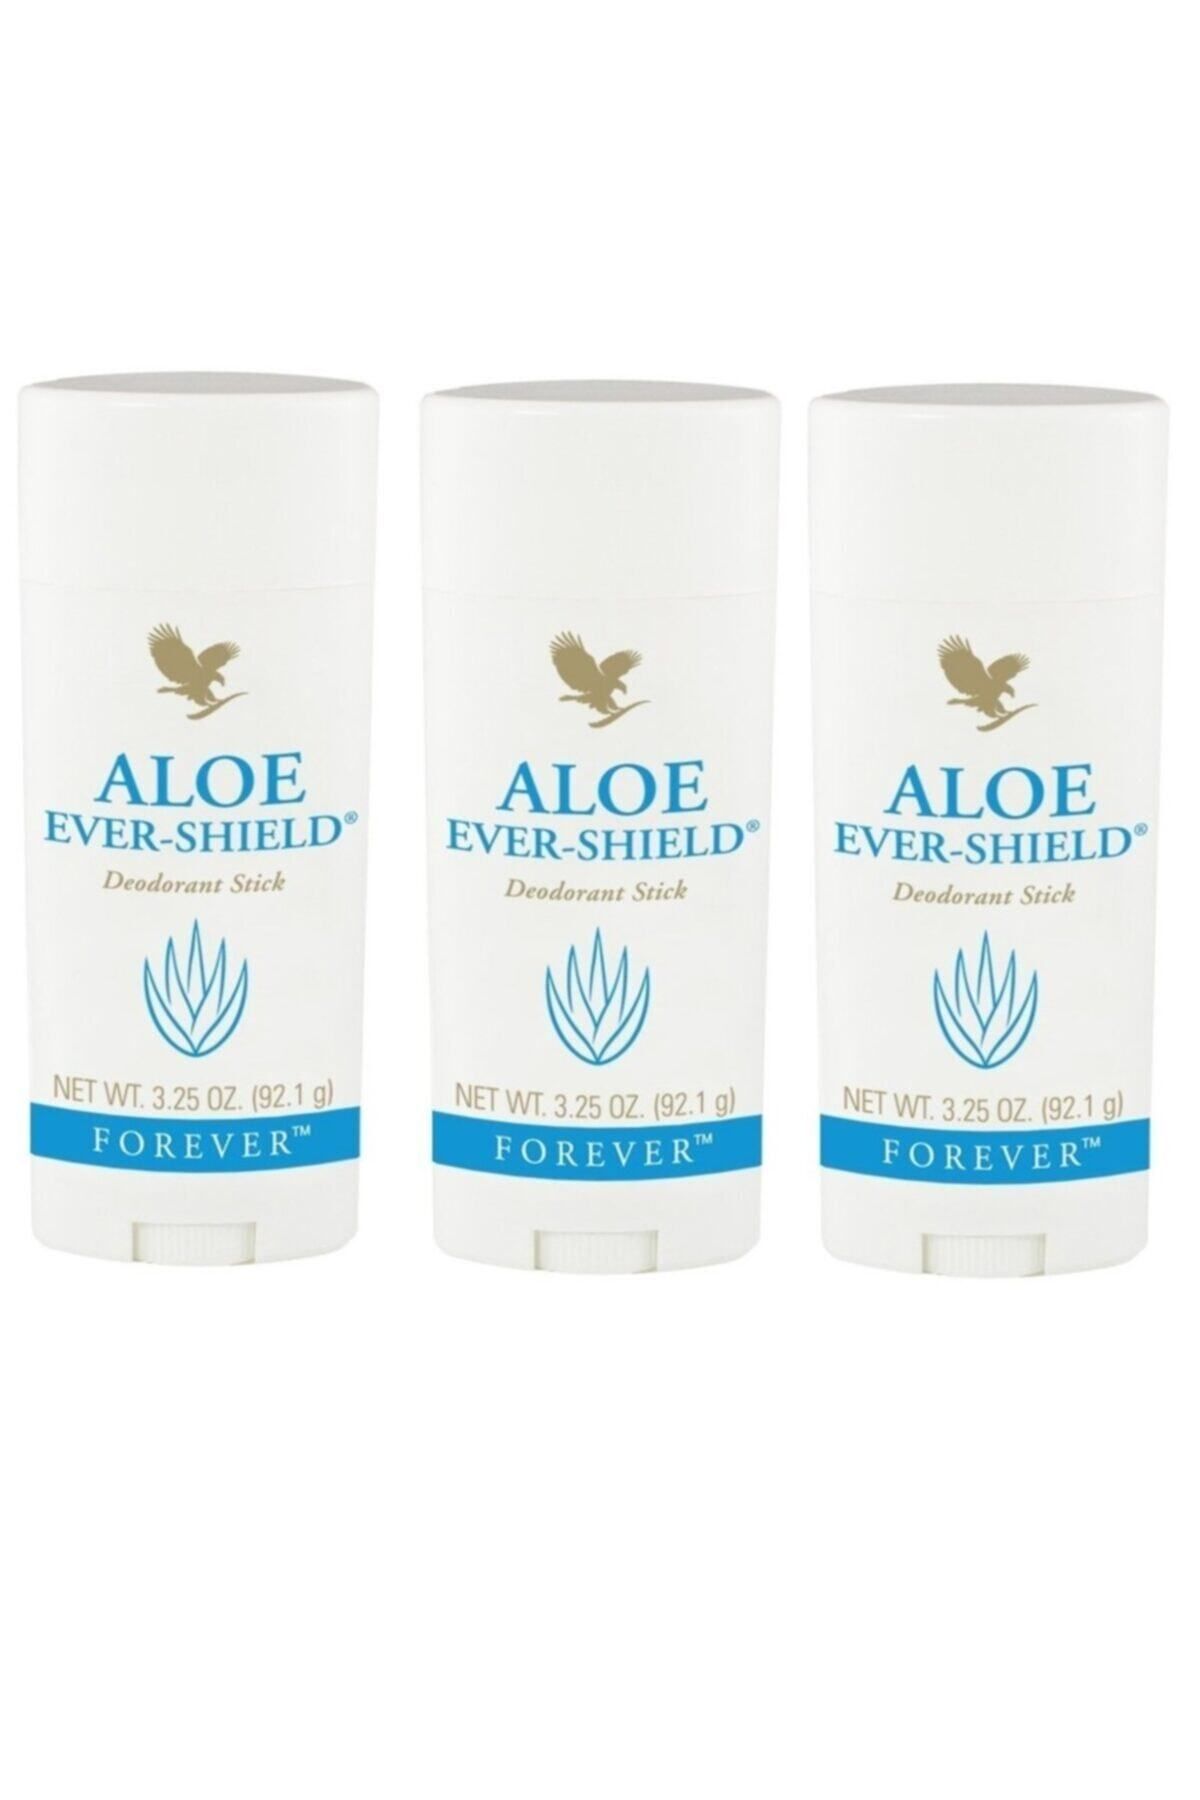 Forever Aloe Ever-shield Deodorant Stick Rollon 3 Adet